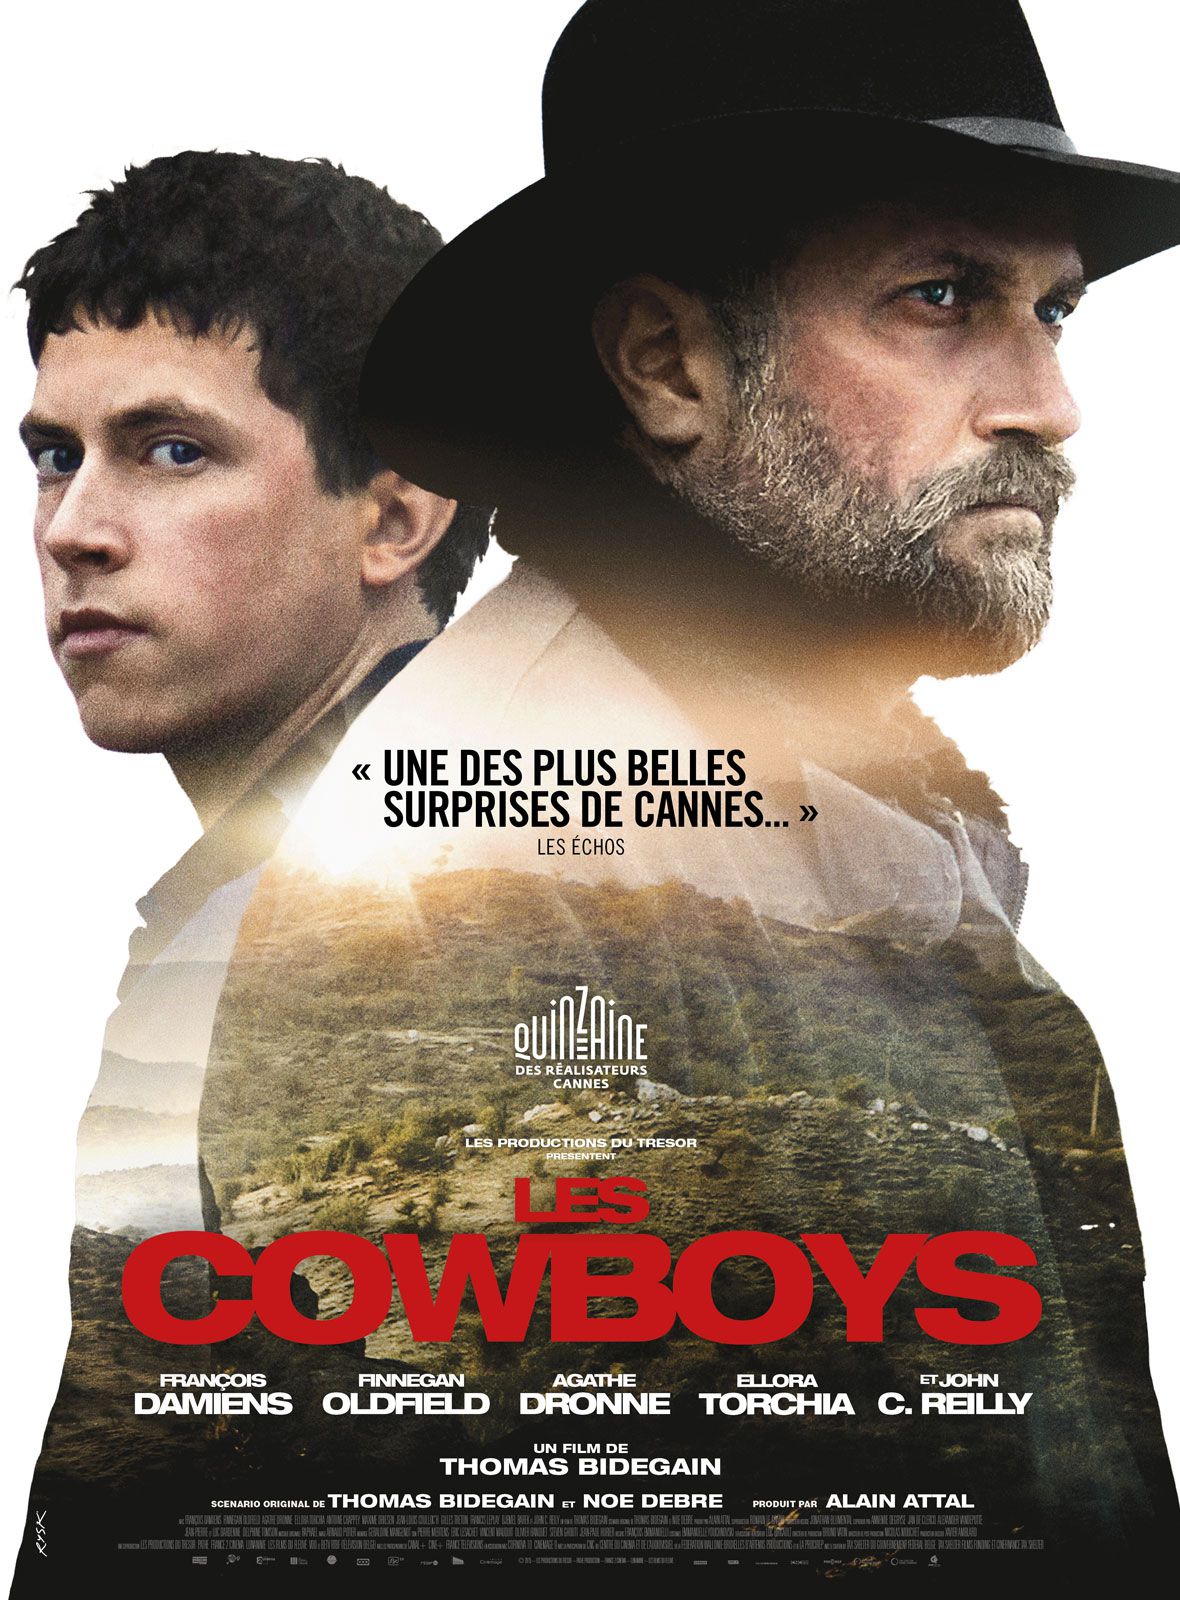 Les Cowboys - Film (2015) streaming VF gratuit complet